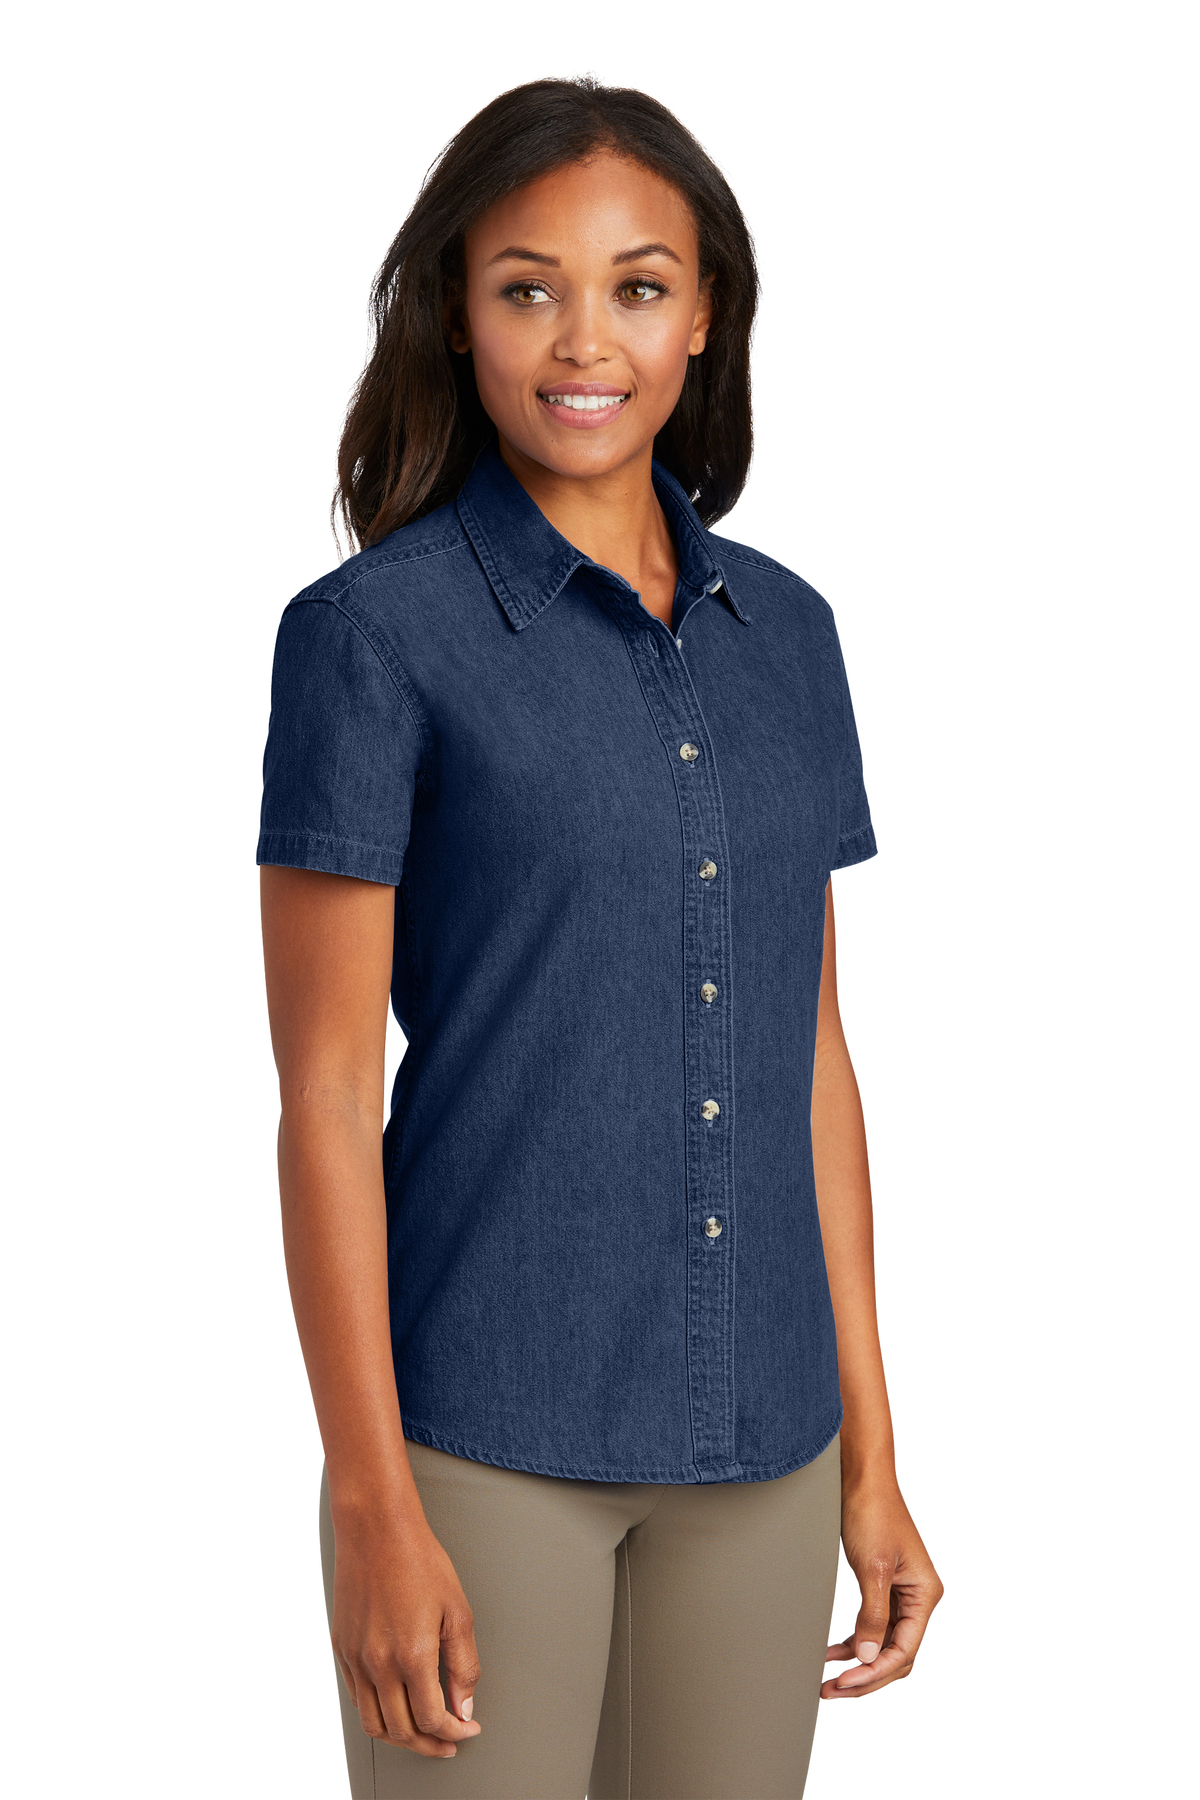 Port & Company LSP11 Ladies Short Sleeve Value Denim Shirt 